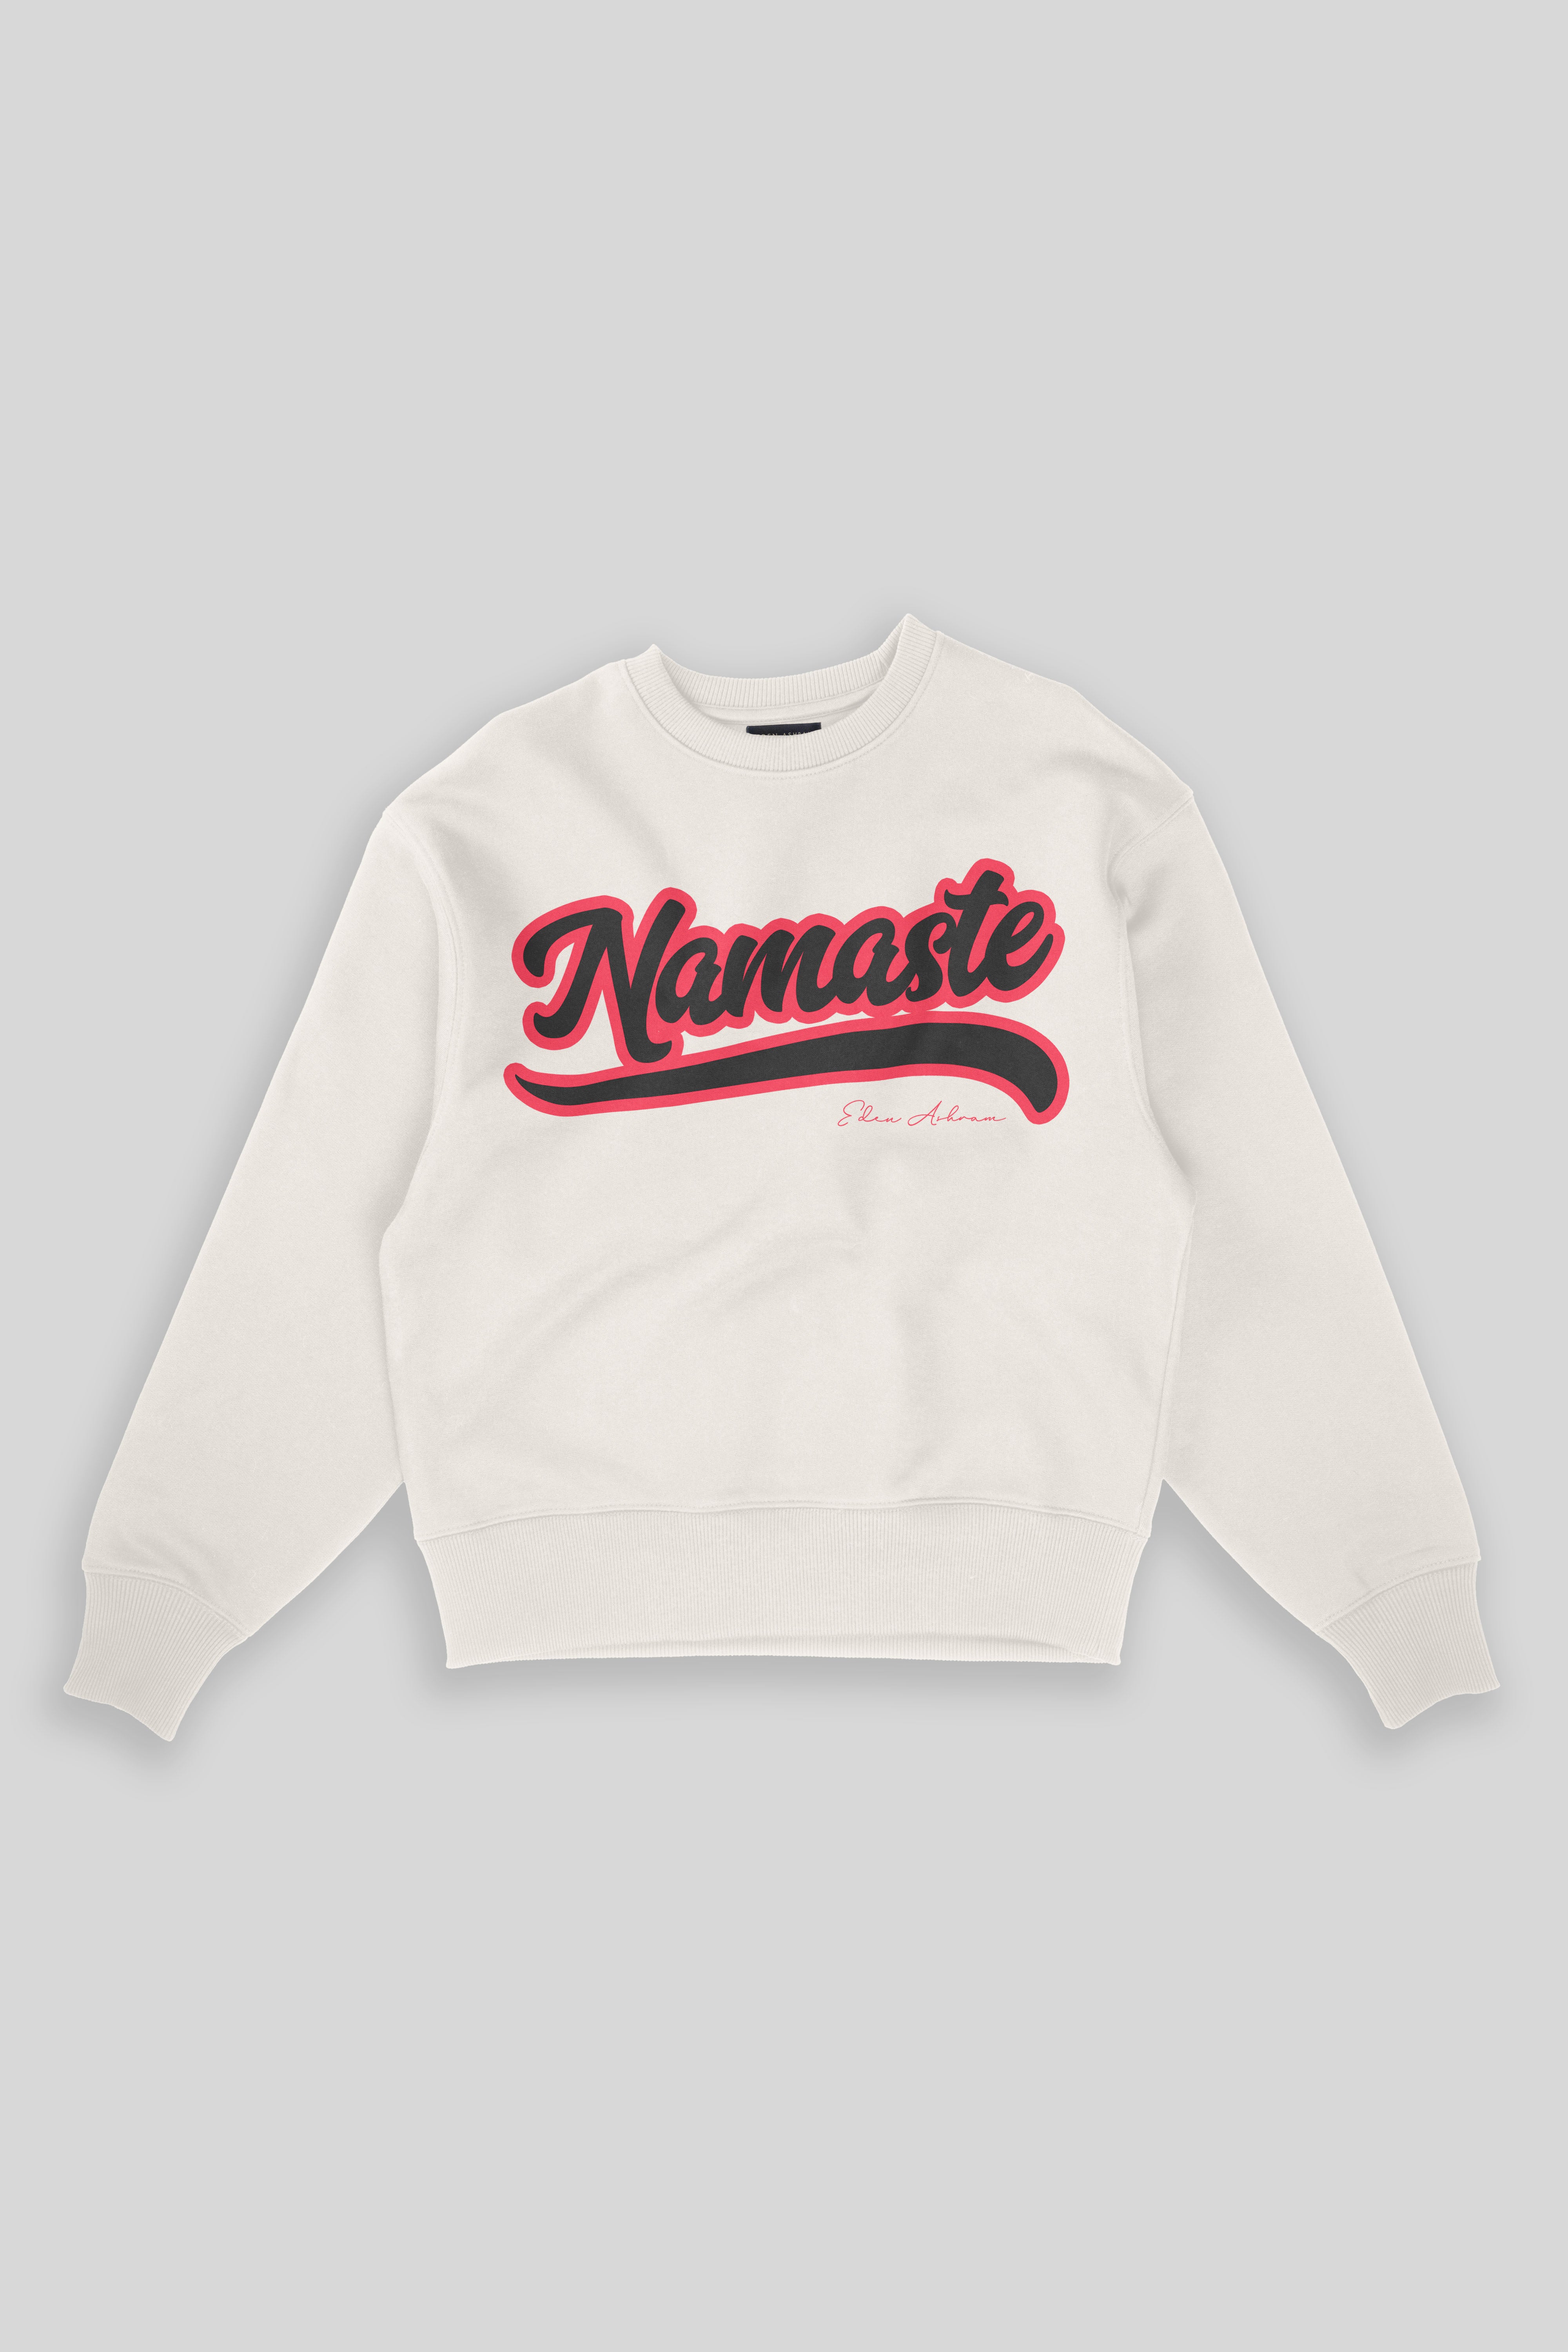 EDEN ASHRAM Namaste Premium Organic Relaxed Sweatshirt Off White